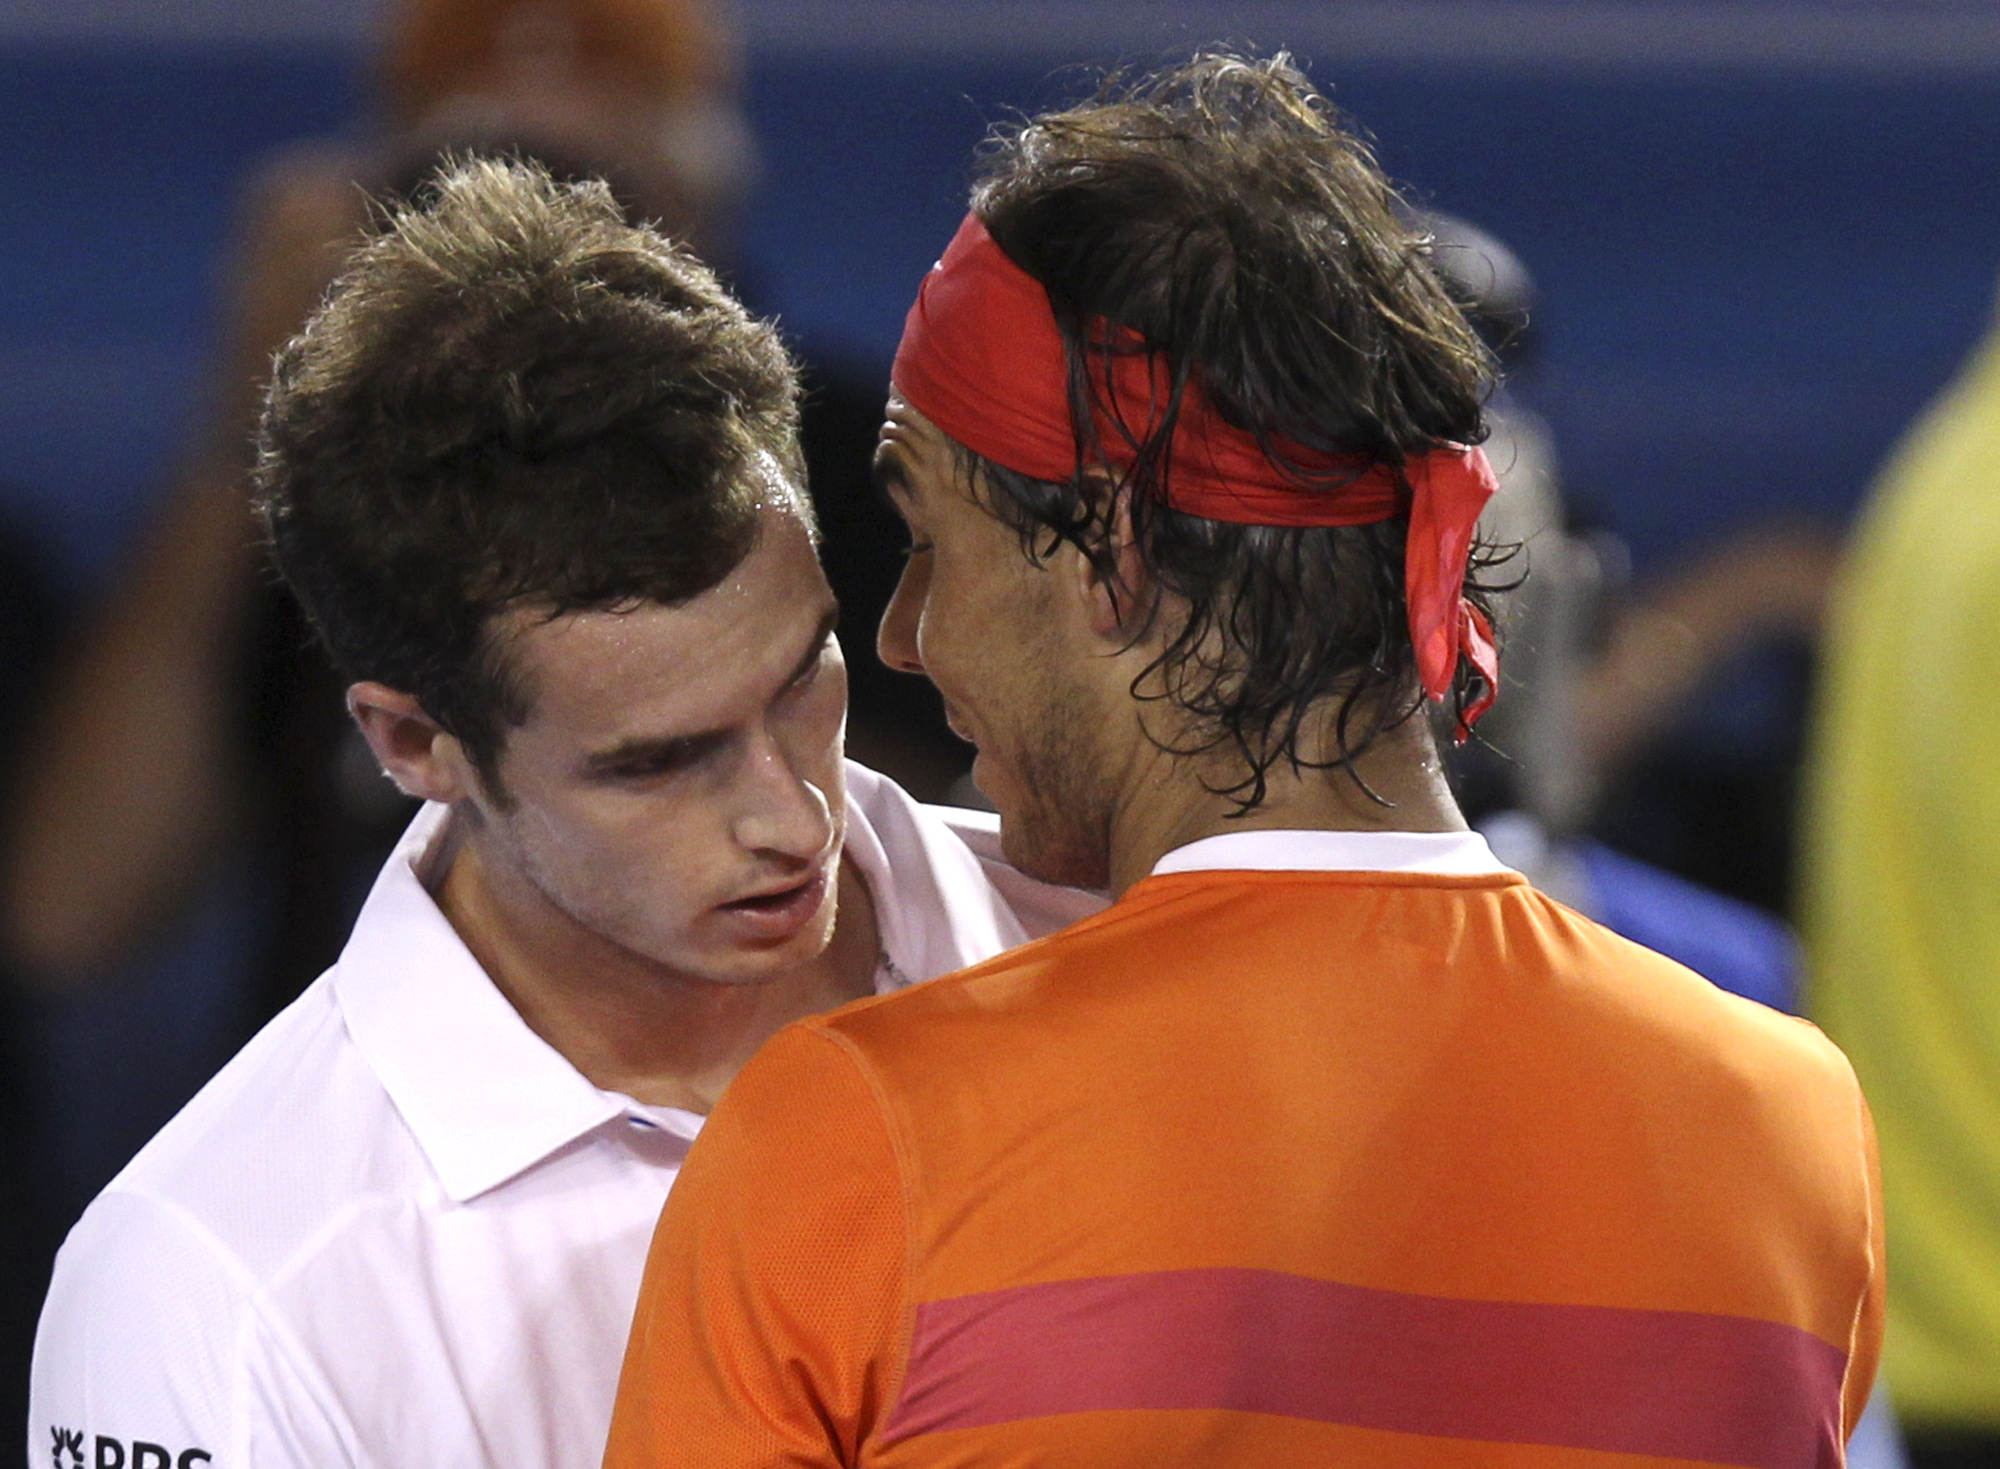 Tennis, Roger Federer, Australian Open, Marin Cilic, Andy Roddick, Andy Murray, Rafael Nadal